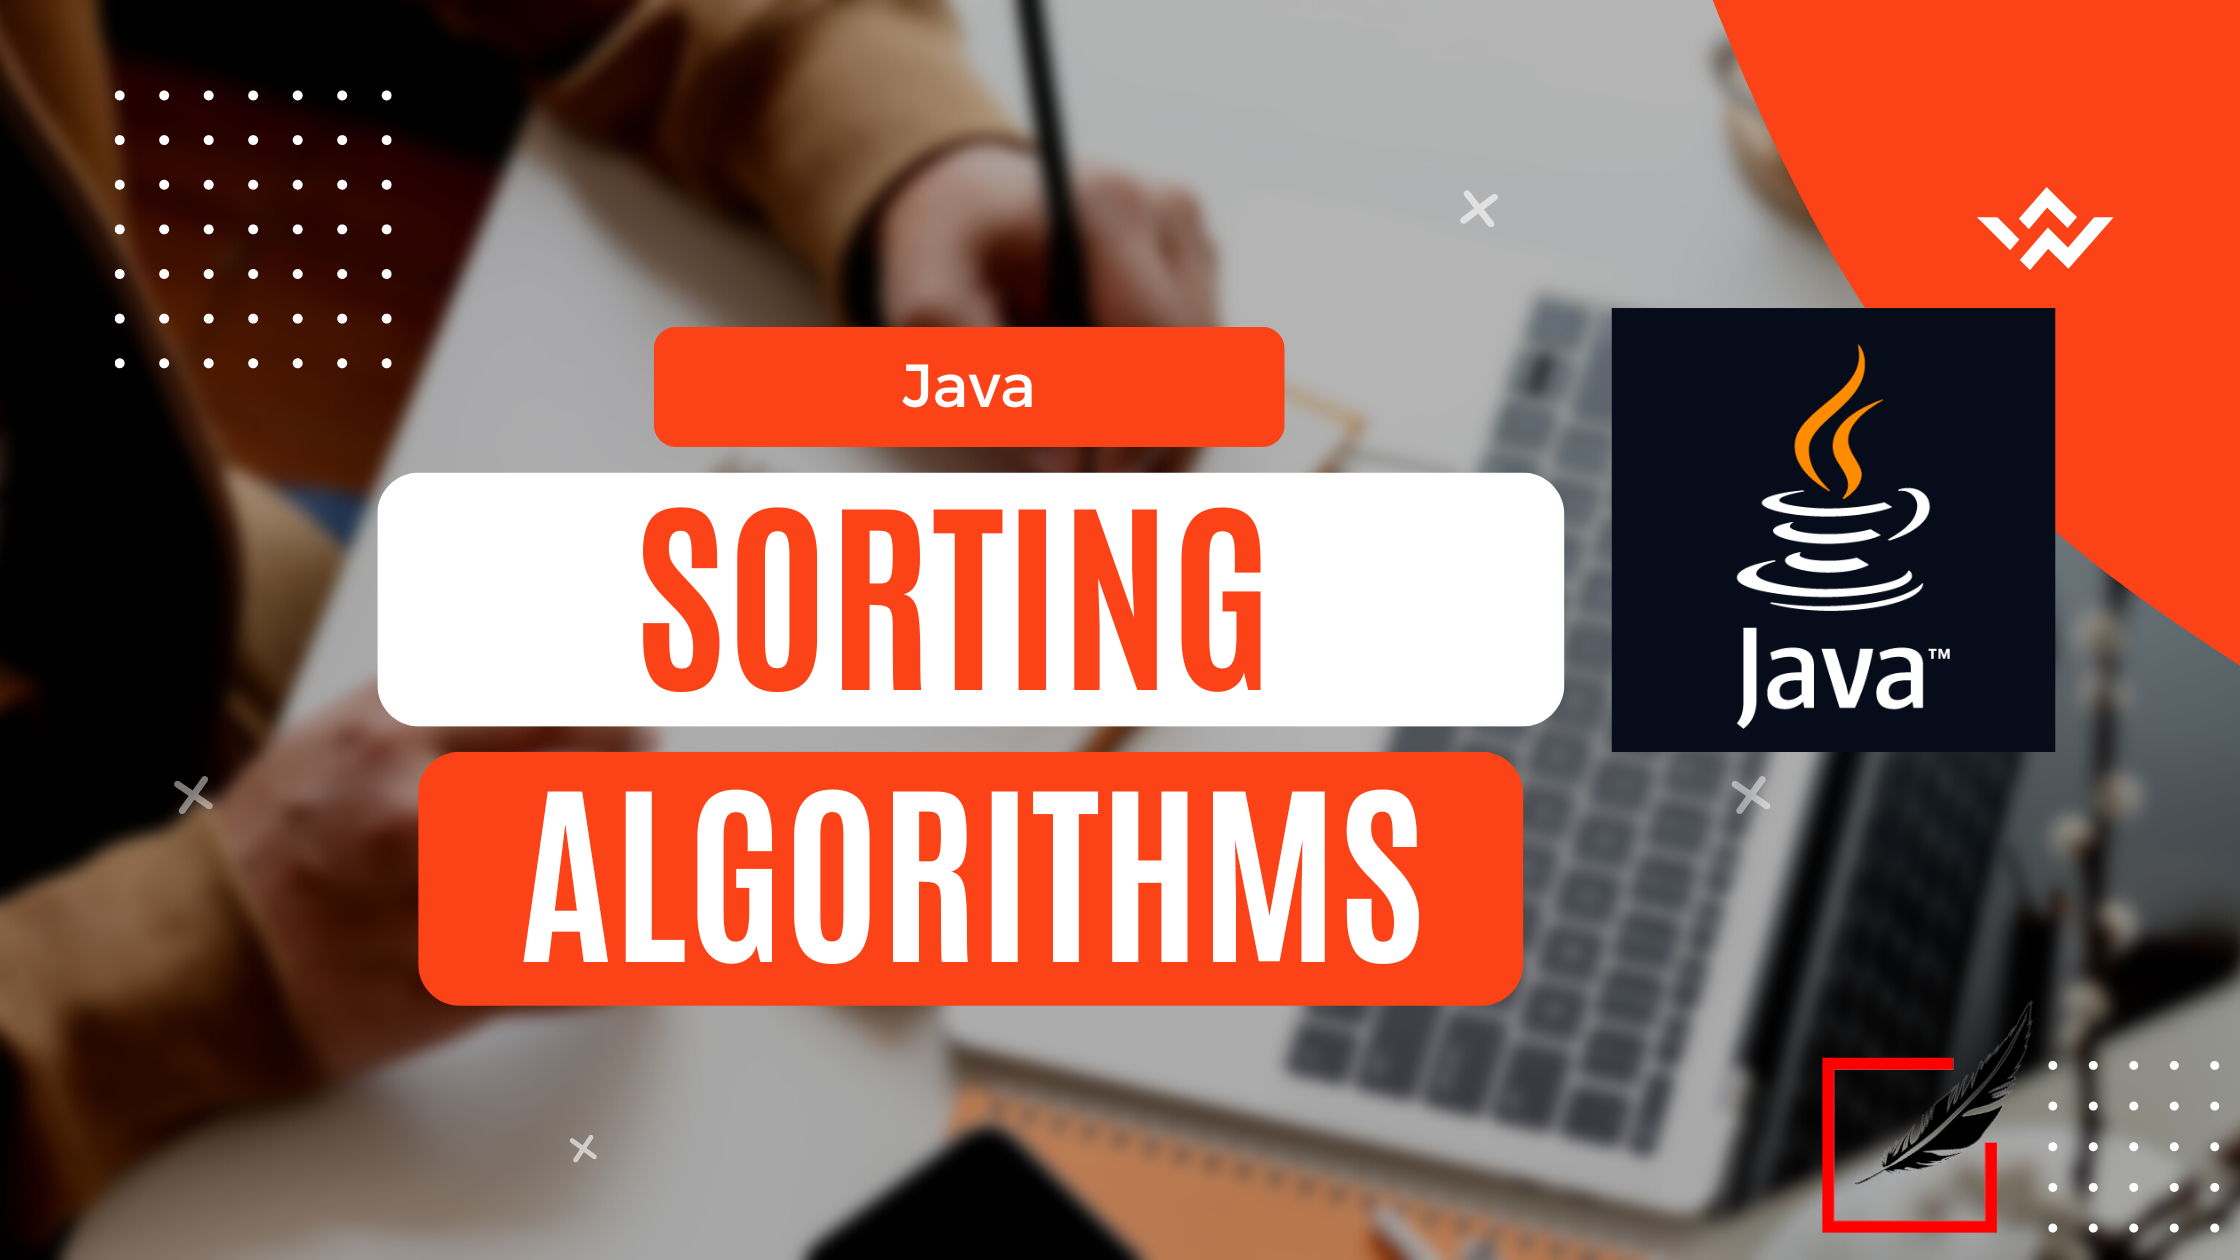 Java sorting algorithms